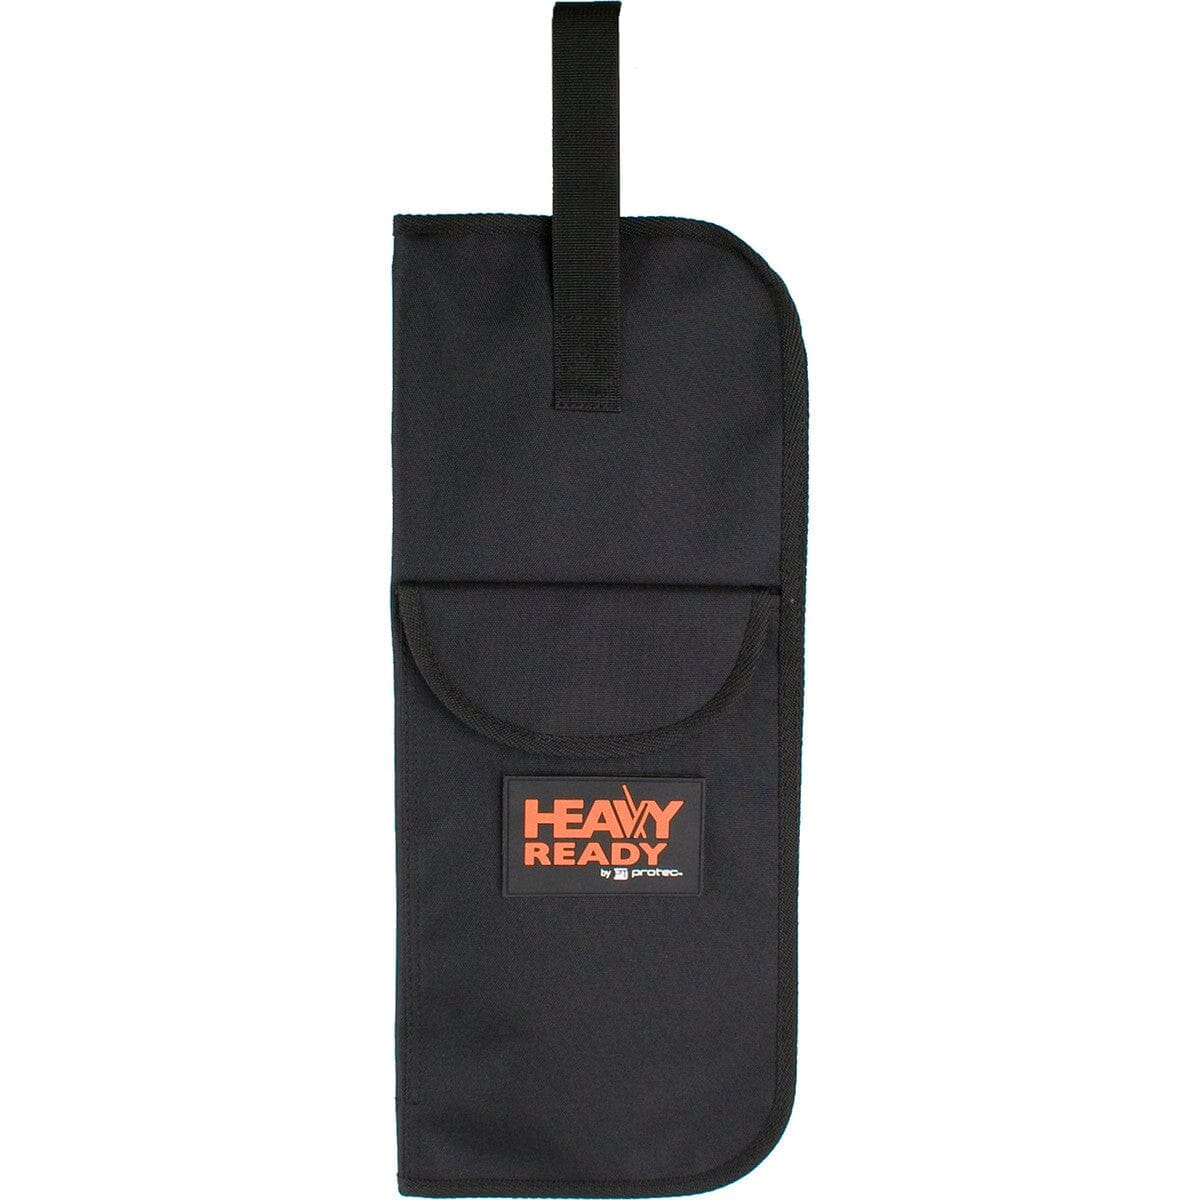 Protec Drum Stick / Mallet Bag - Heavy Ready Series, Black (HR337) NEW CASES Protec 